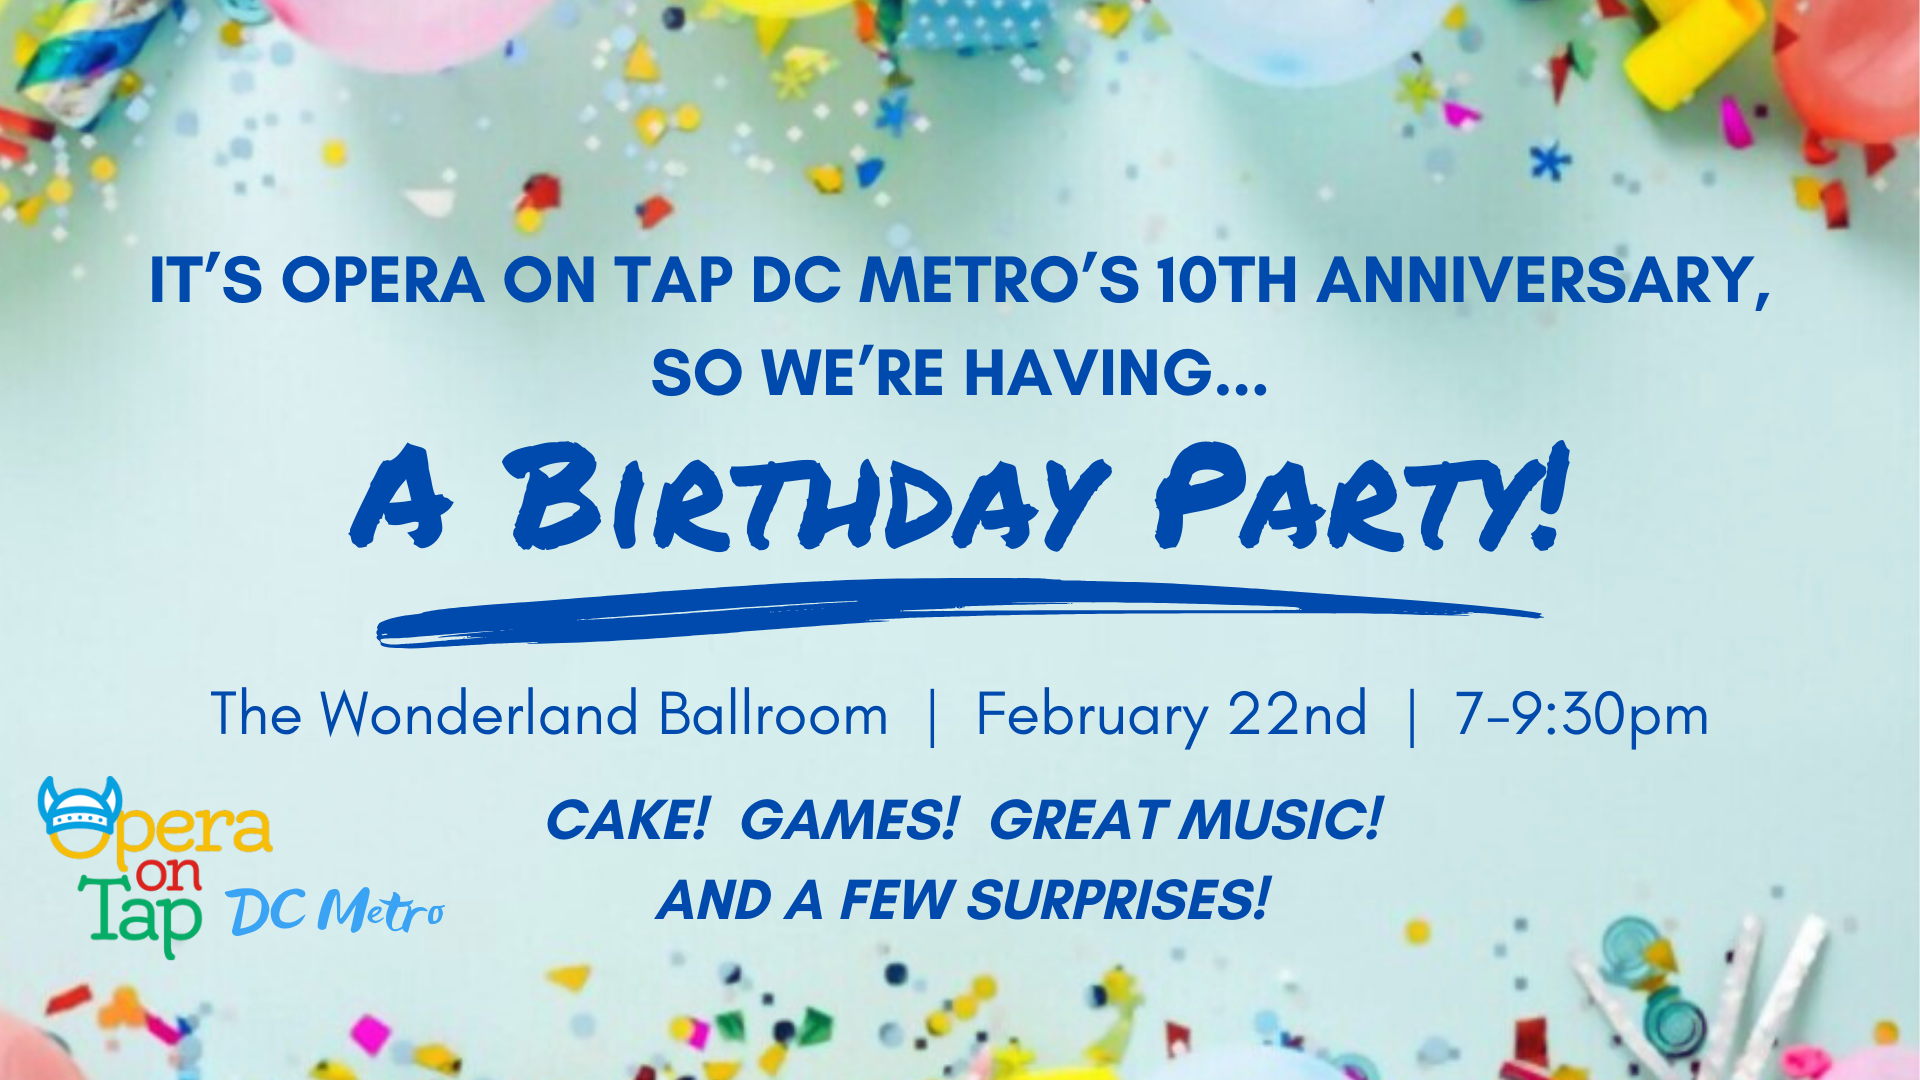 OOT DC Metro's 10th Anniversary Birthday Party!